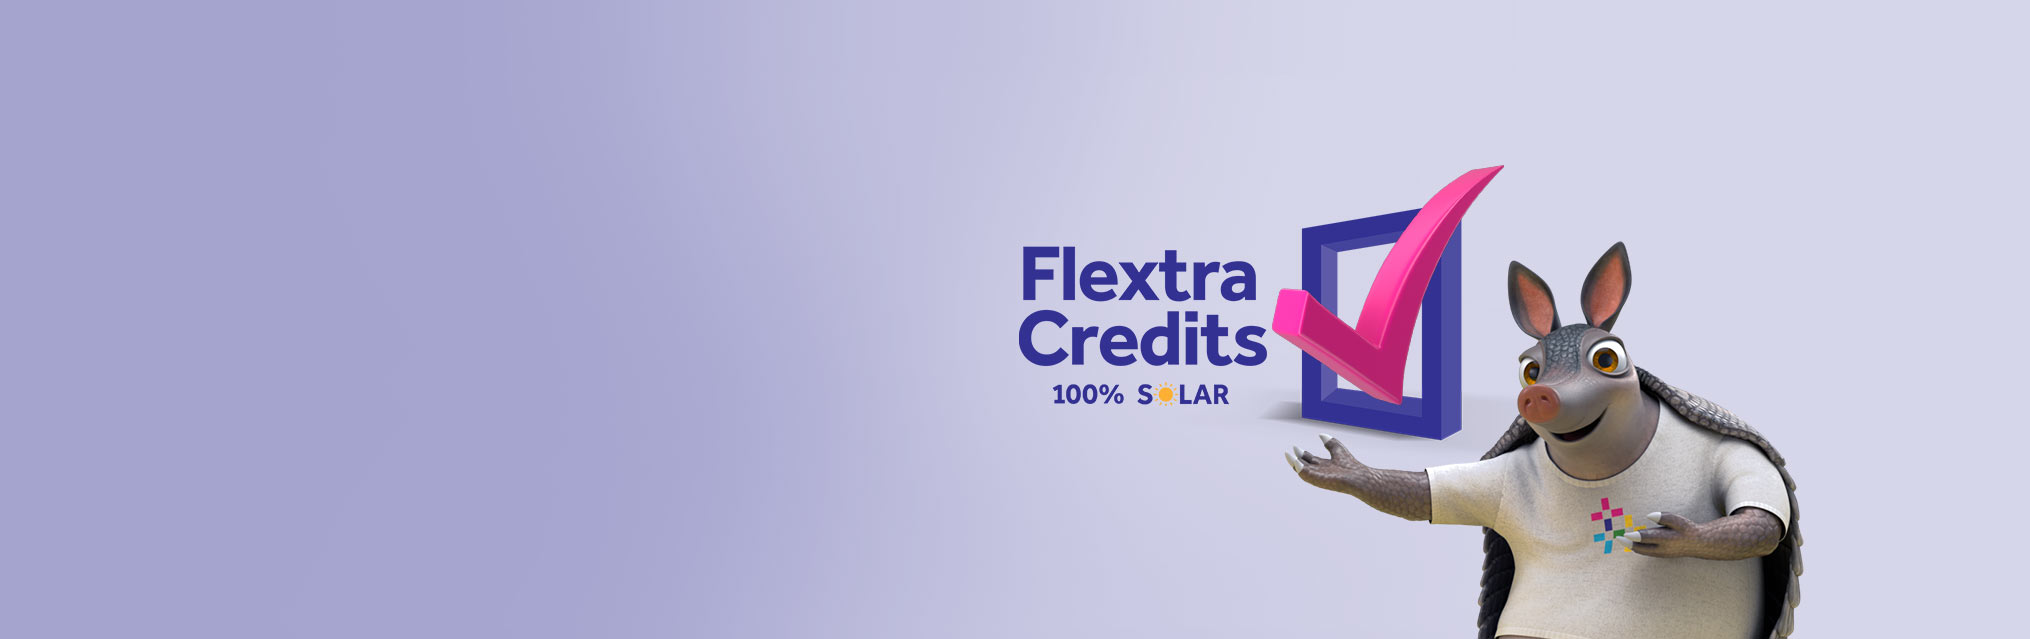 Plan Flextra Credits 100% Solar
